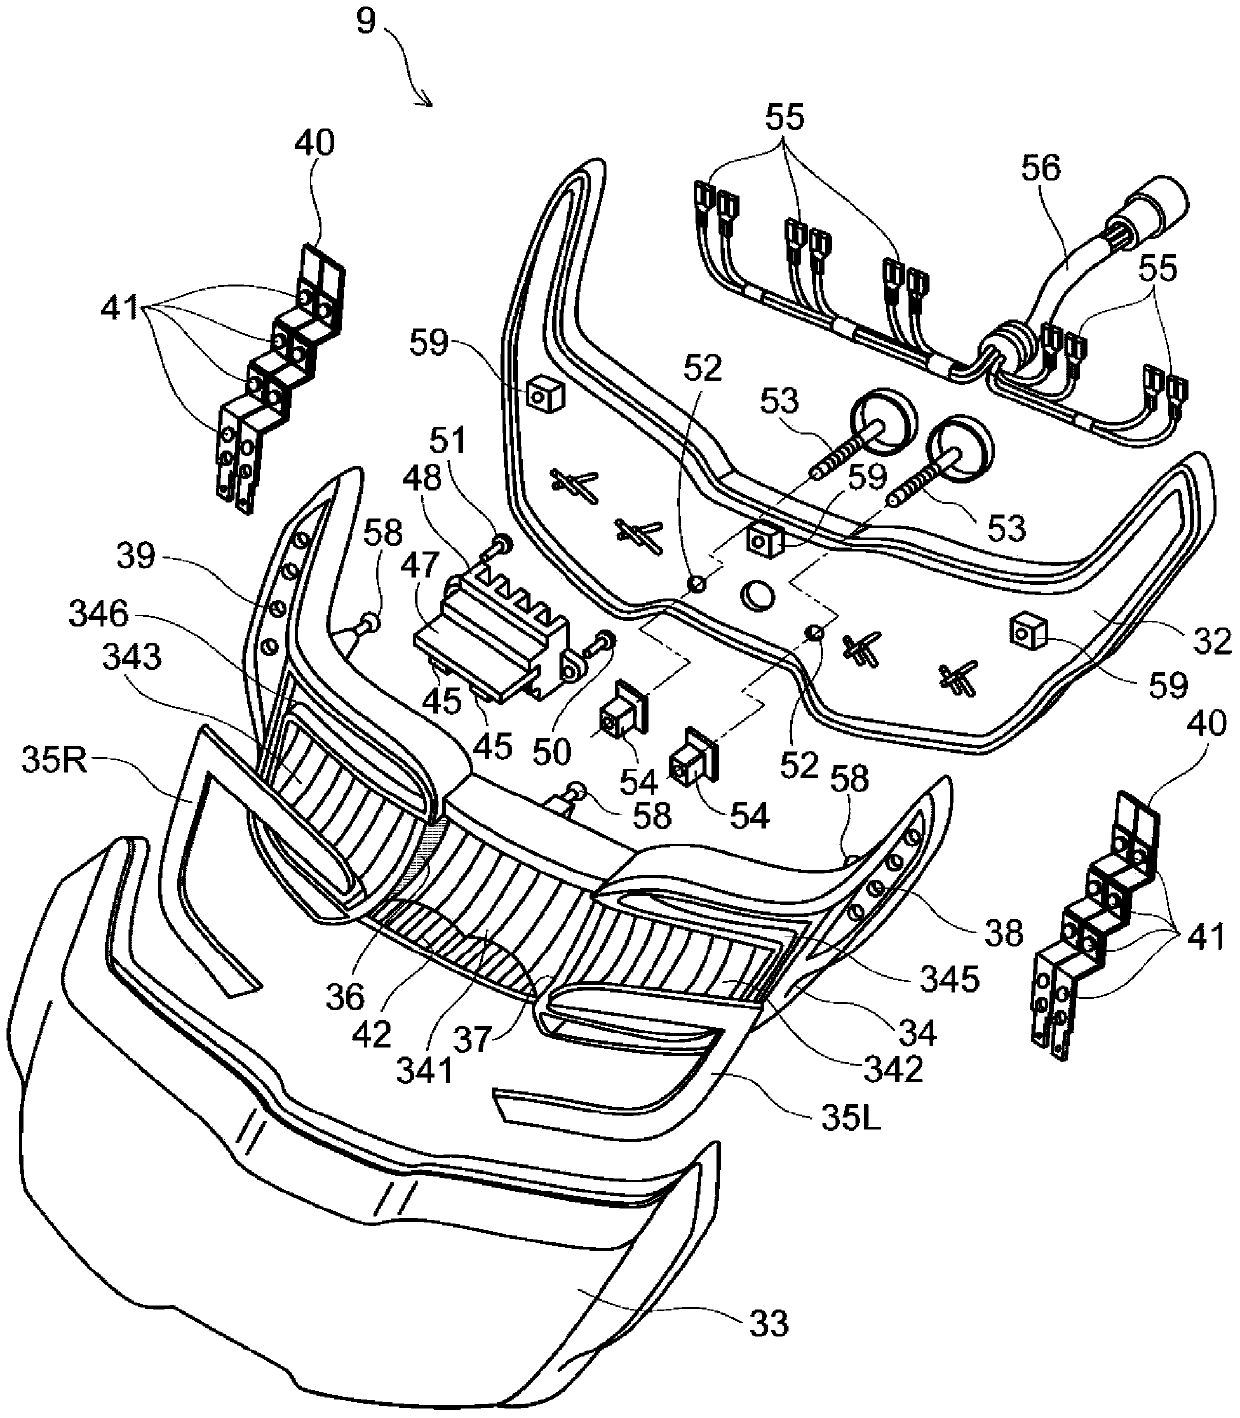 Headlight device of motorcycle